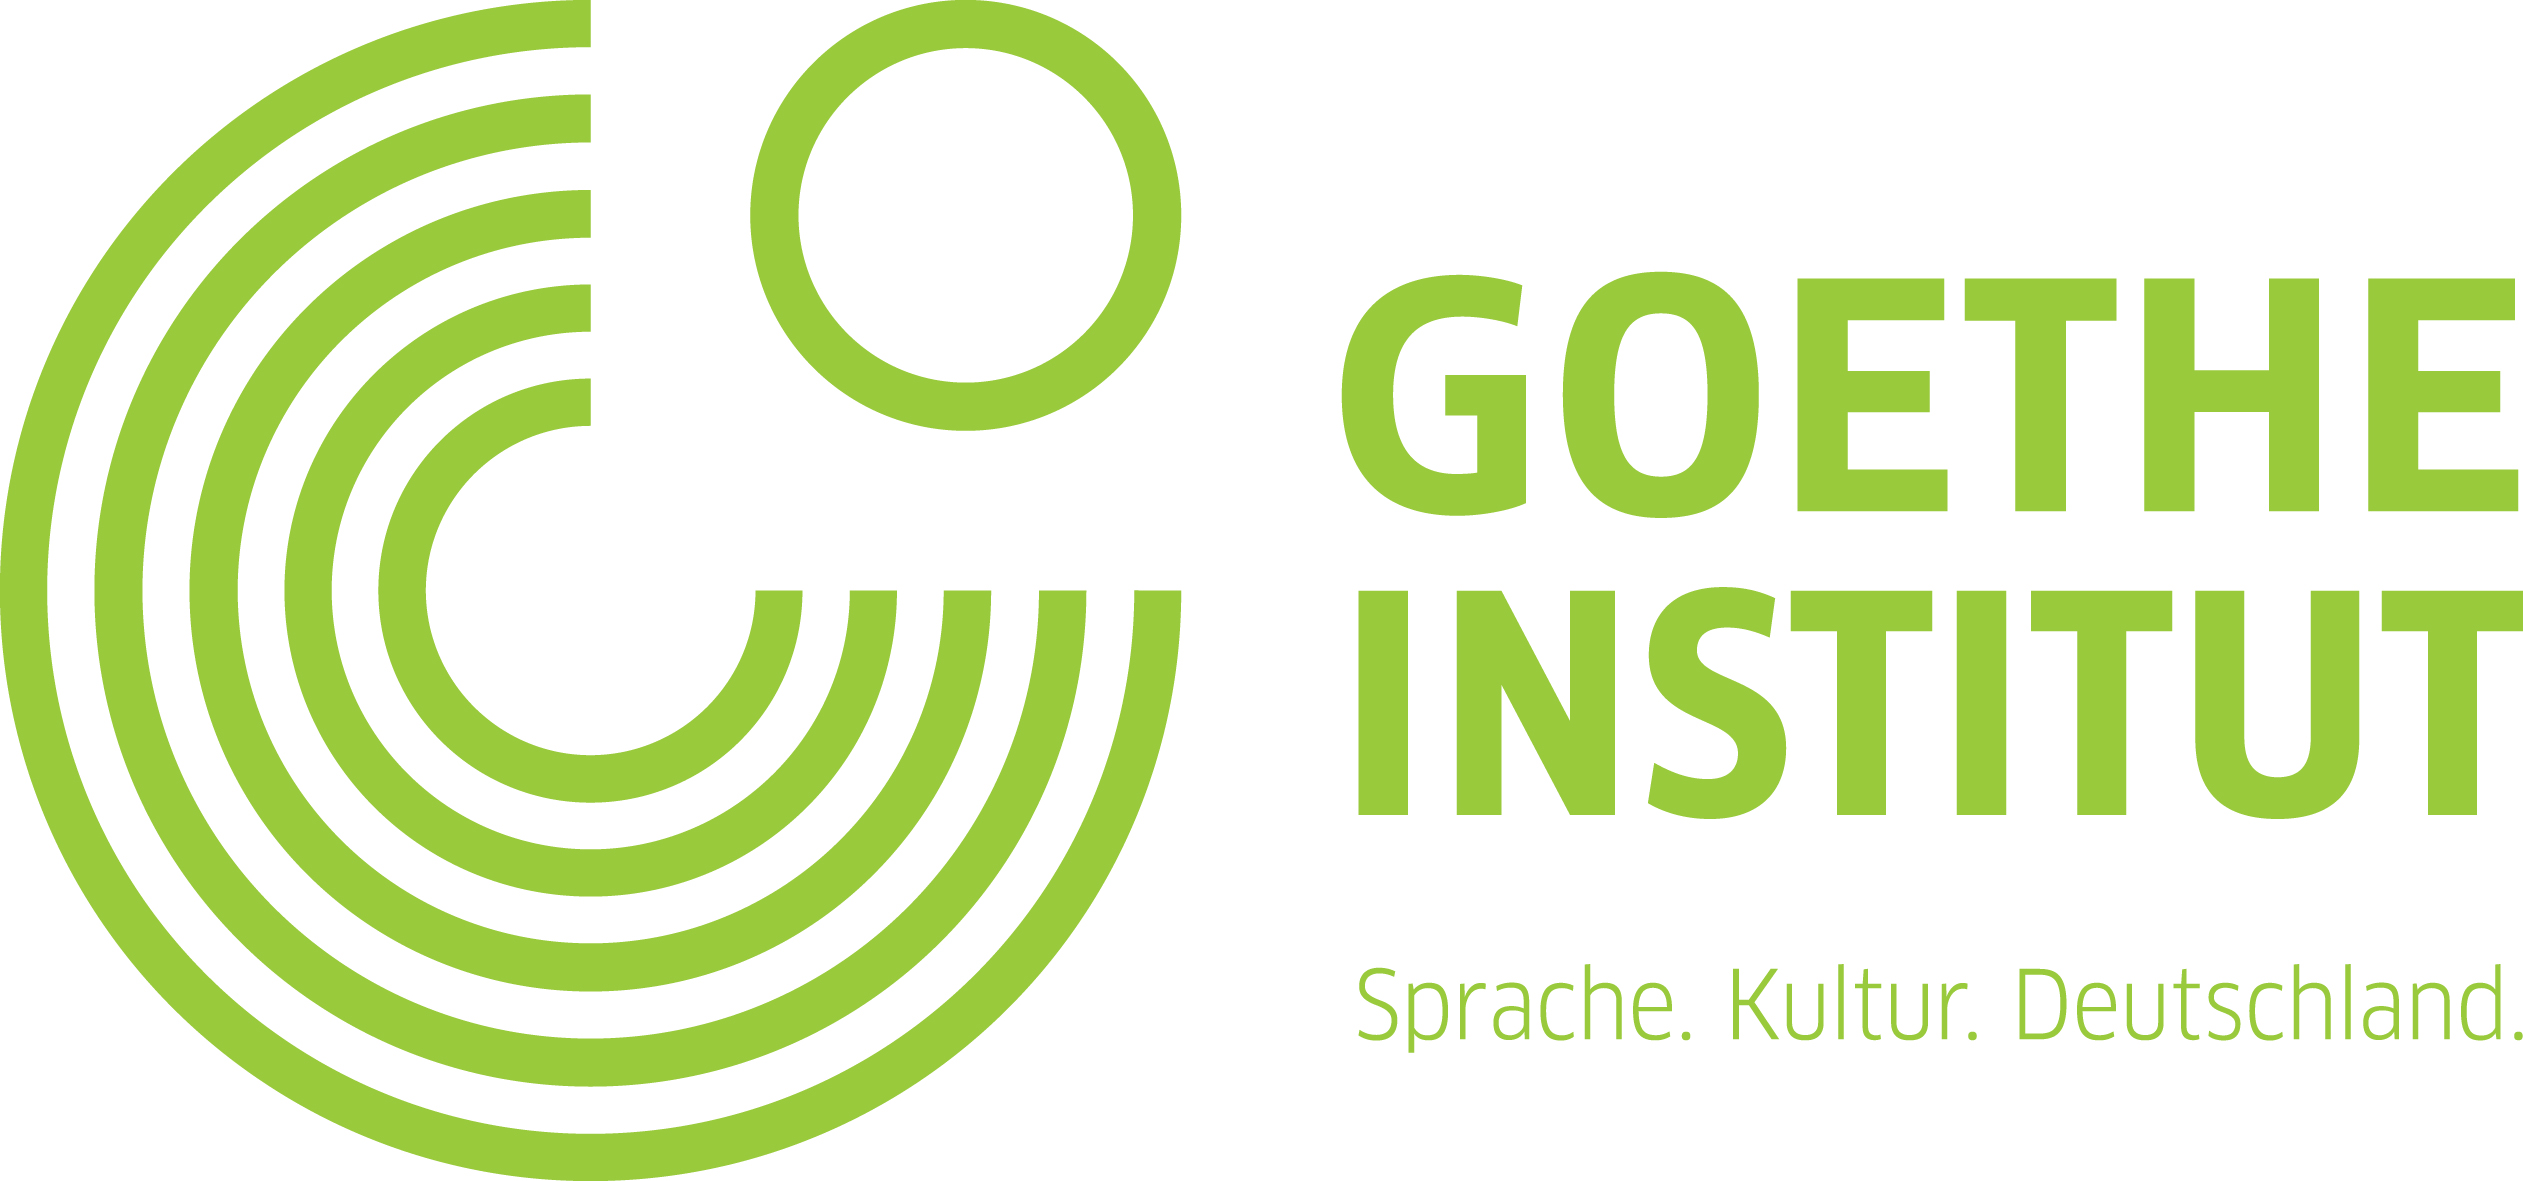 GI Logo inkl Claim horizontal green IsoCV21